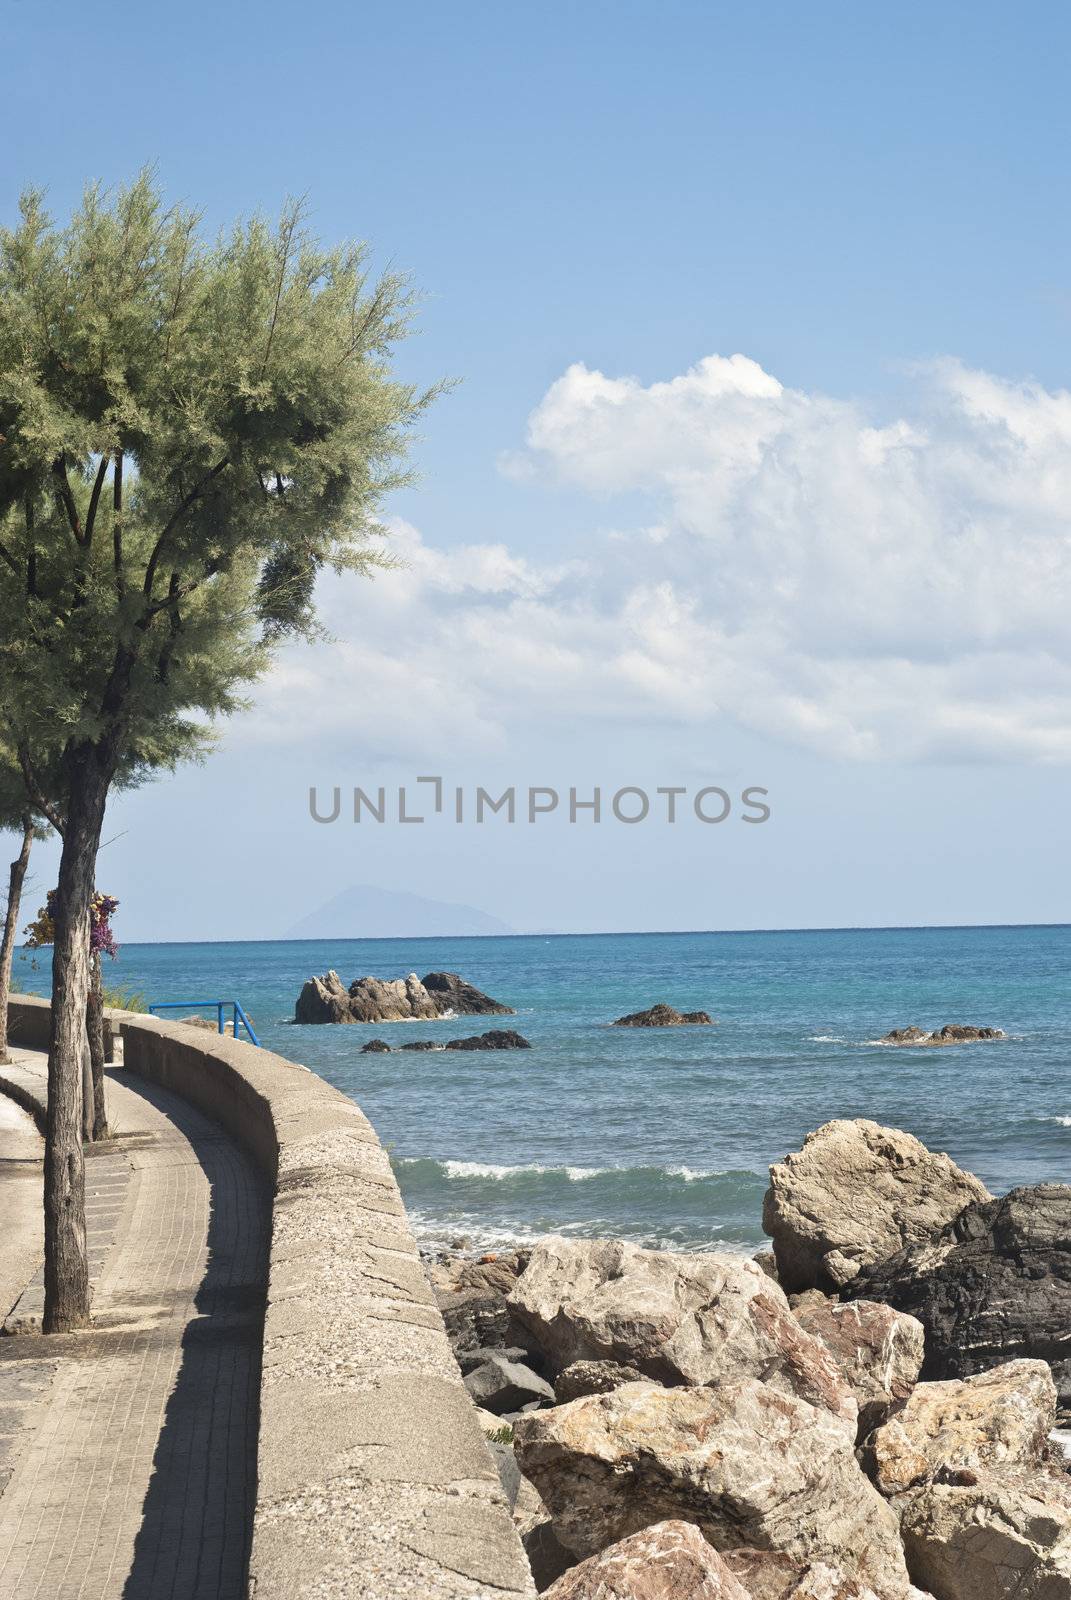 Brolo beach, Messina, Sicily by gandolfocannatella